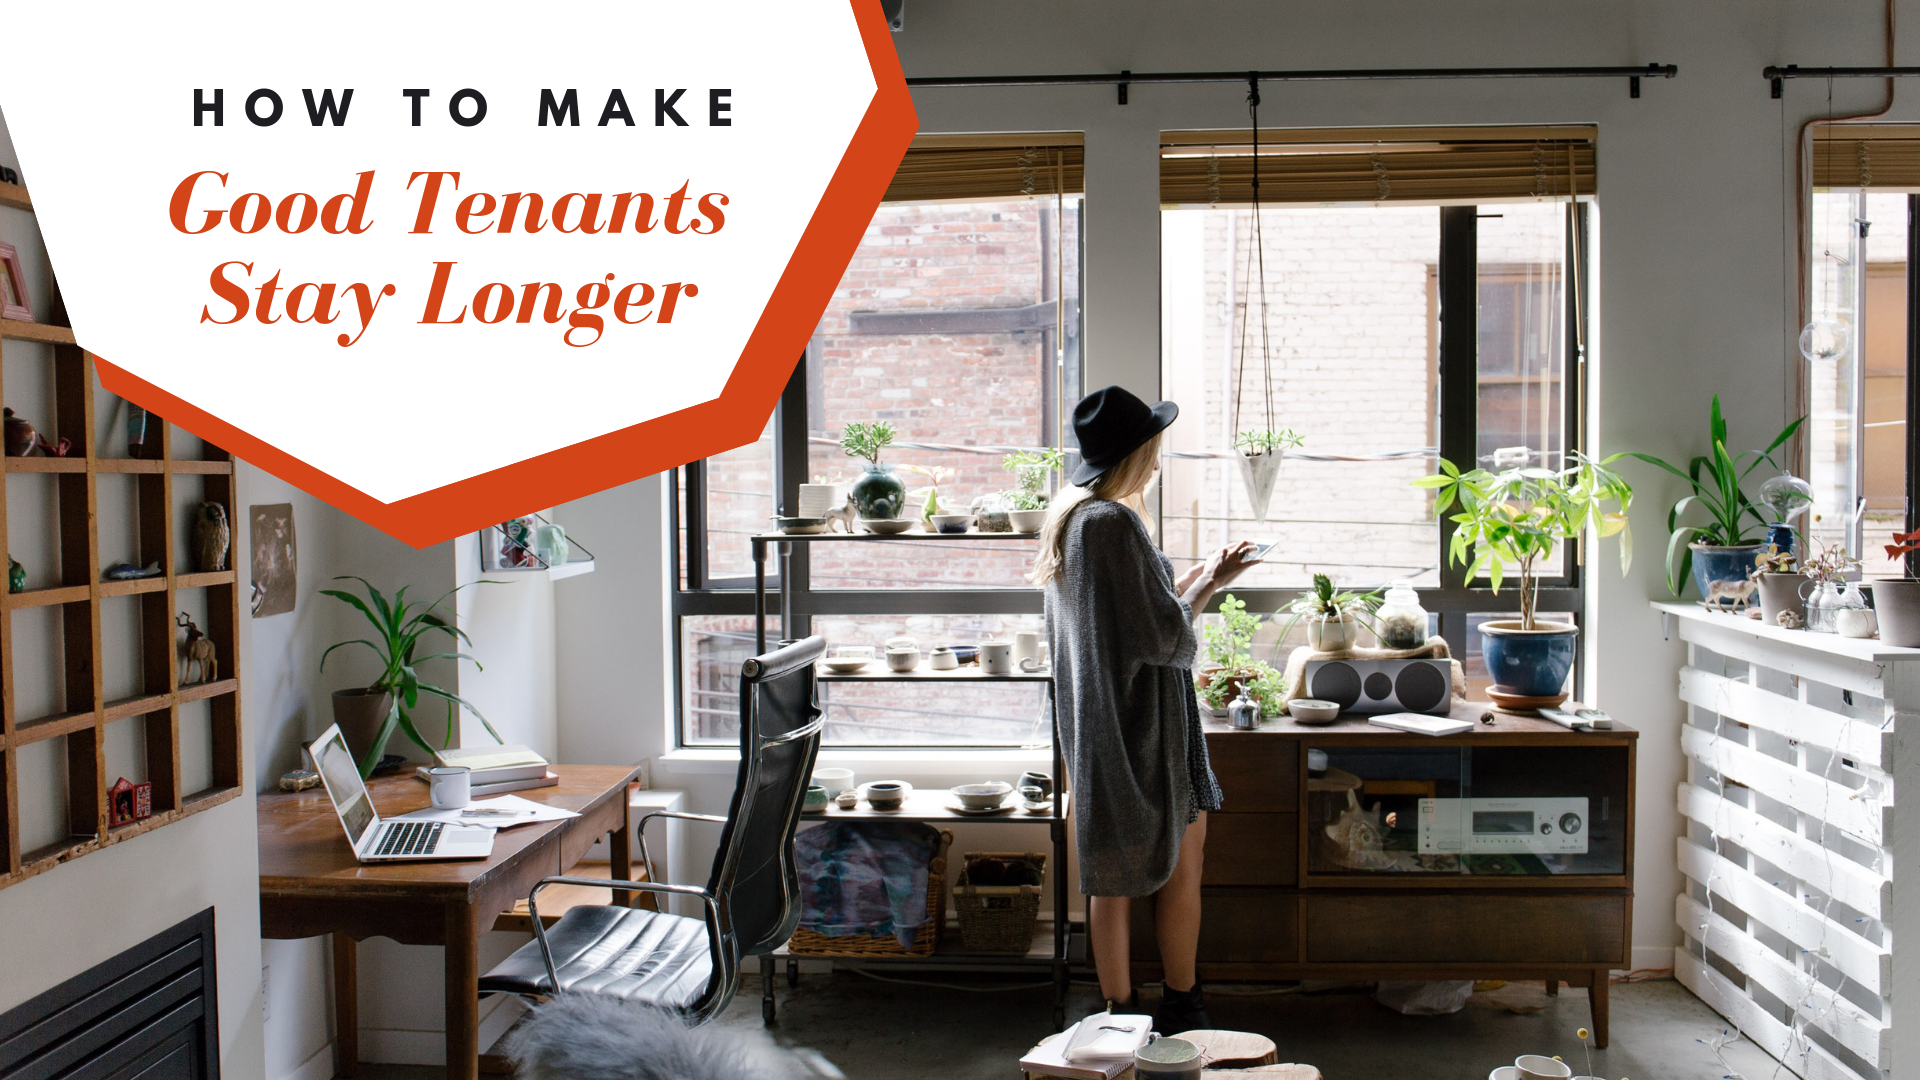 Tenant Retention 101: How to Make Good Tenants Stay Longer | Atlanta Property Management Education